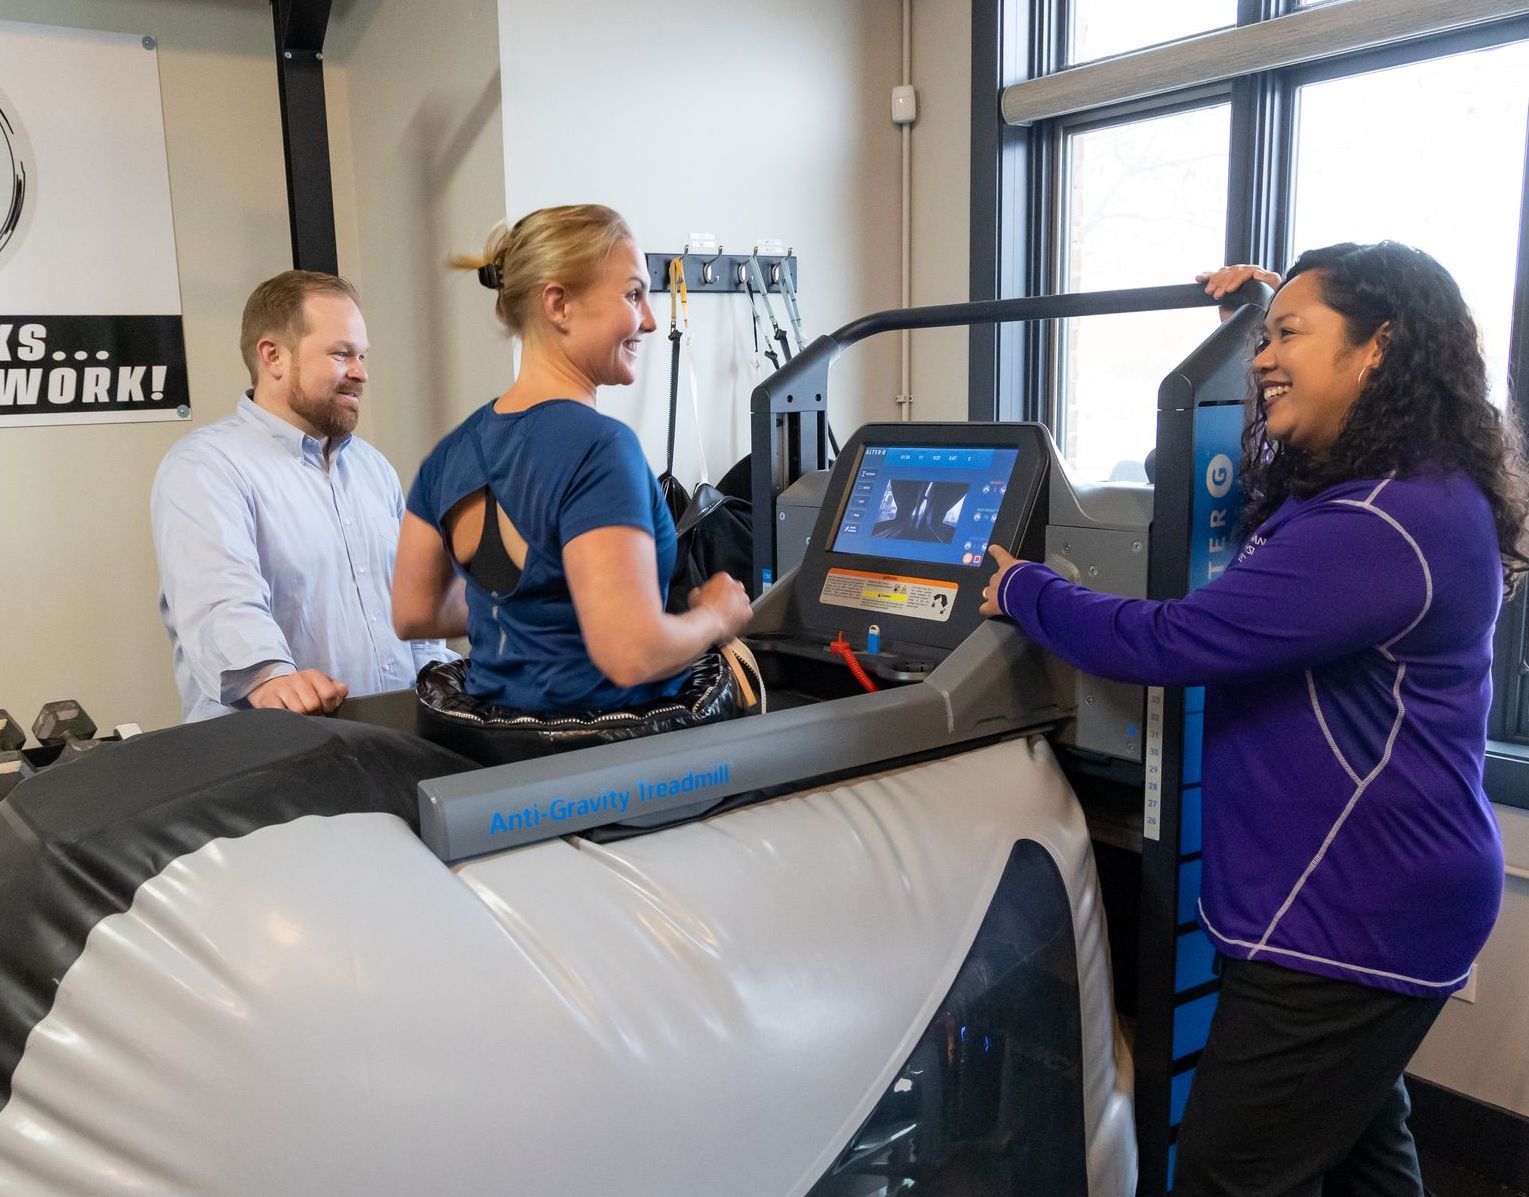 anti-gravity treadmill therapy helping a woman walk